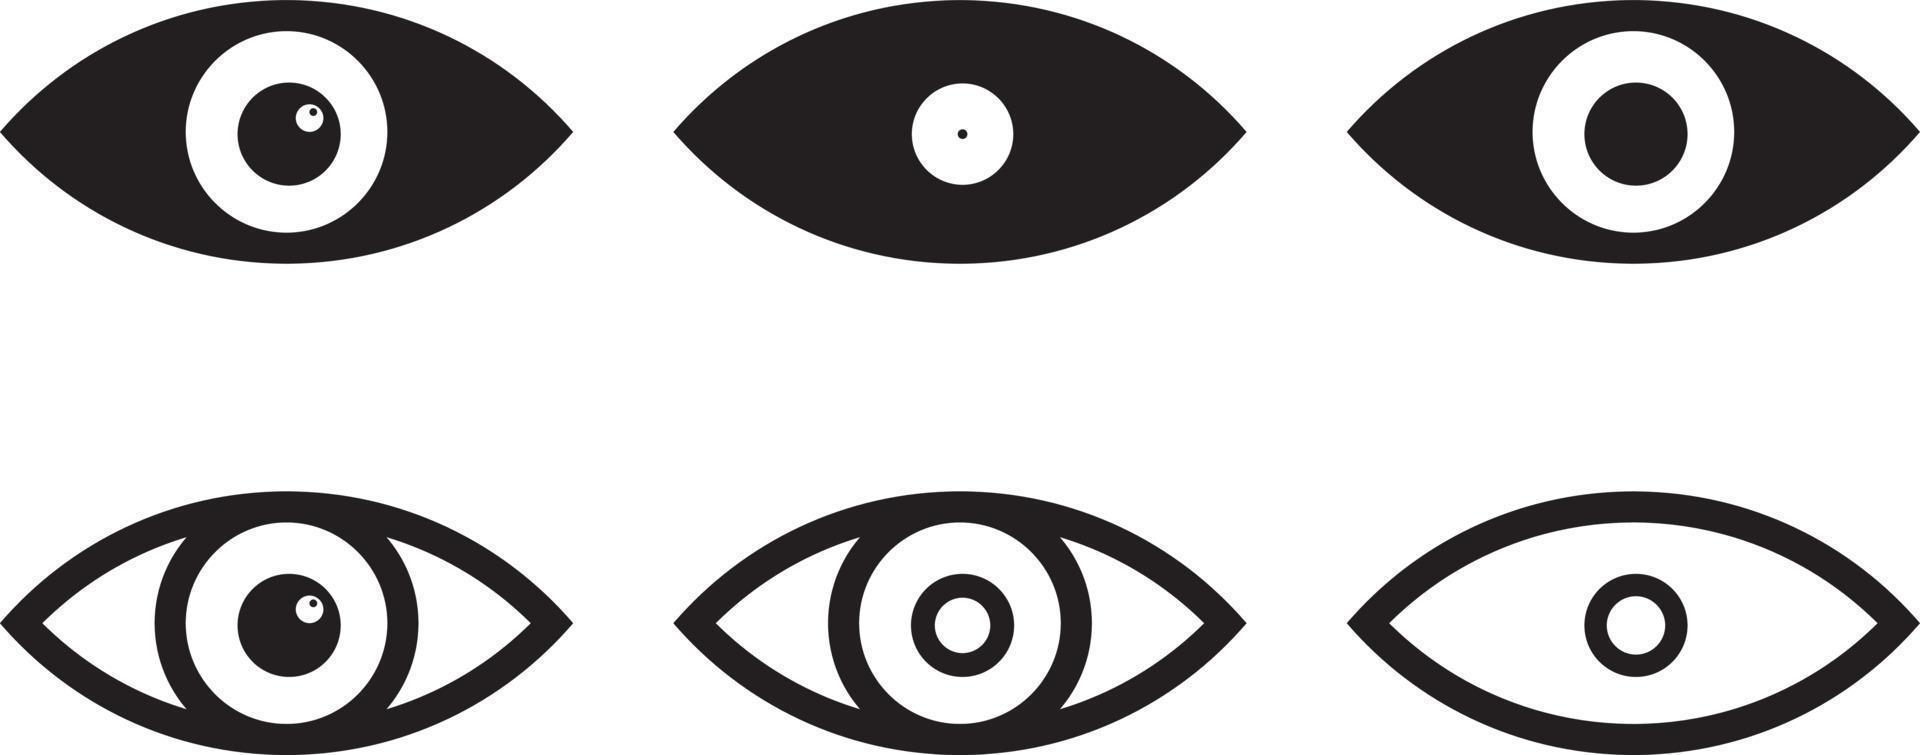 Retina scan eye icons. Simple eyes collection. Eye icon set vector